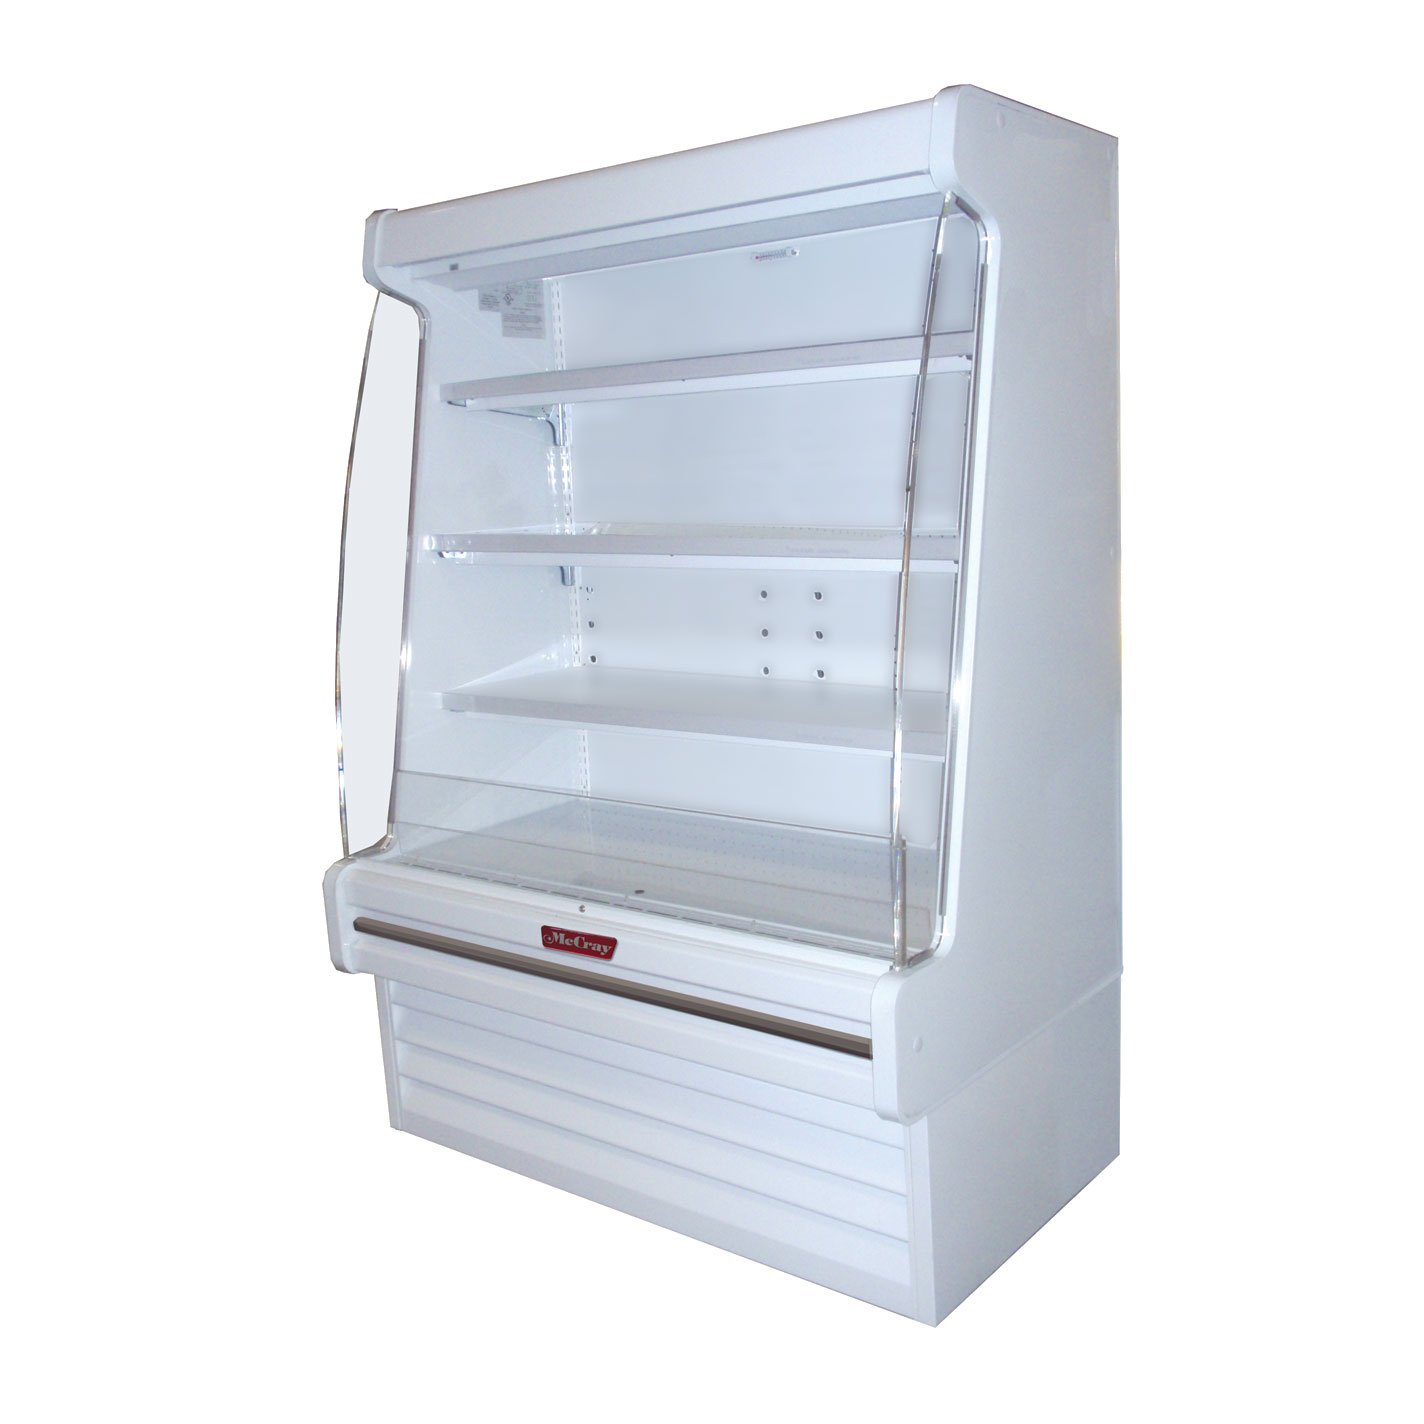 Howard-McCray SC-OD30E-8-LED 99'' Vertical Dairy Open Merchandiser in White, Self-Contained, 3 Shelves, w/ LED Lighting